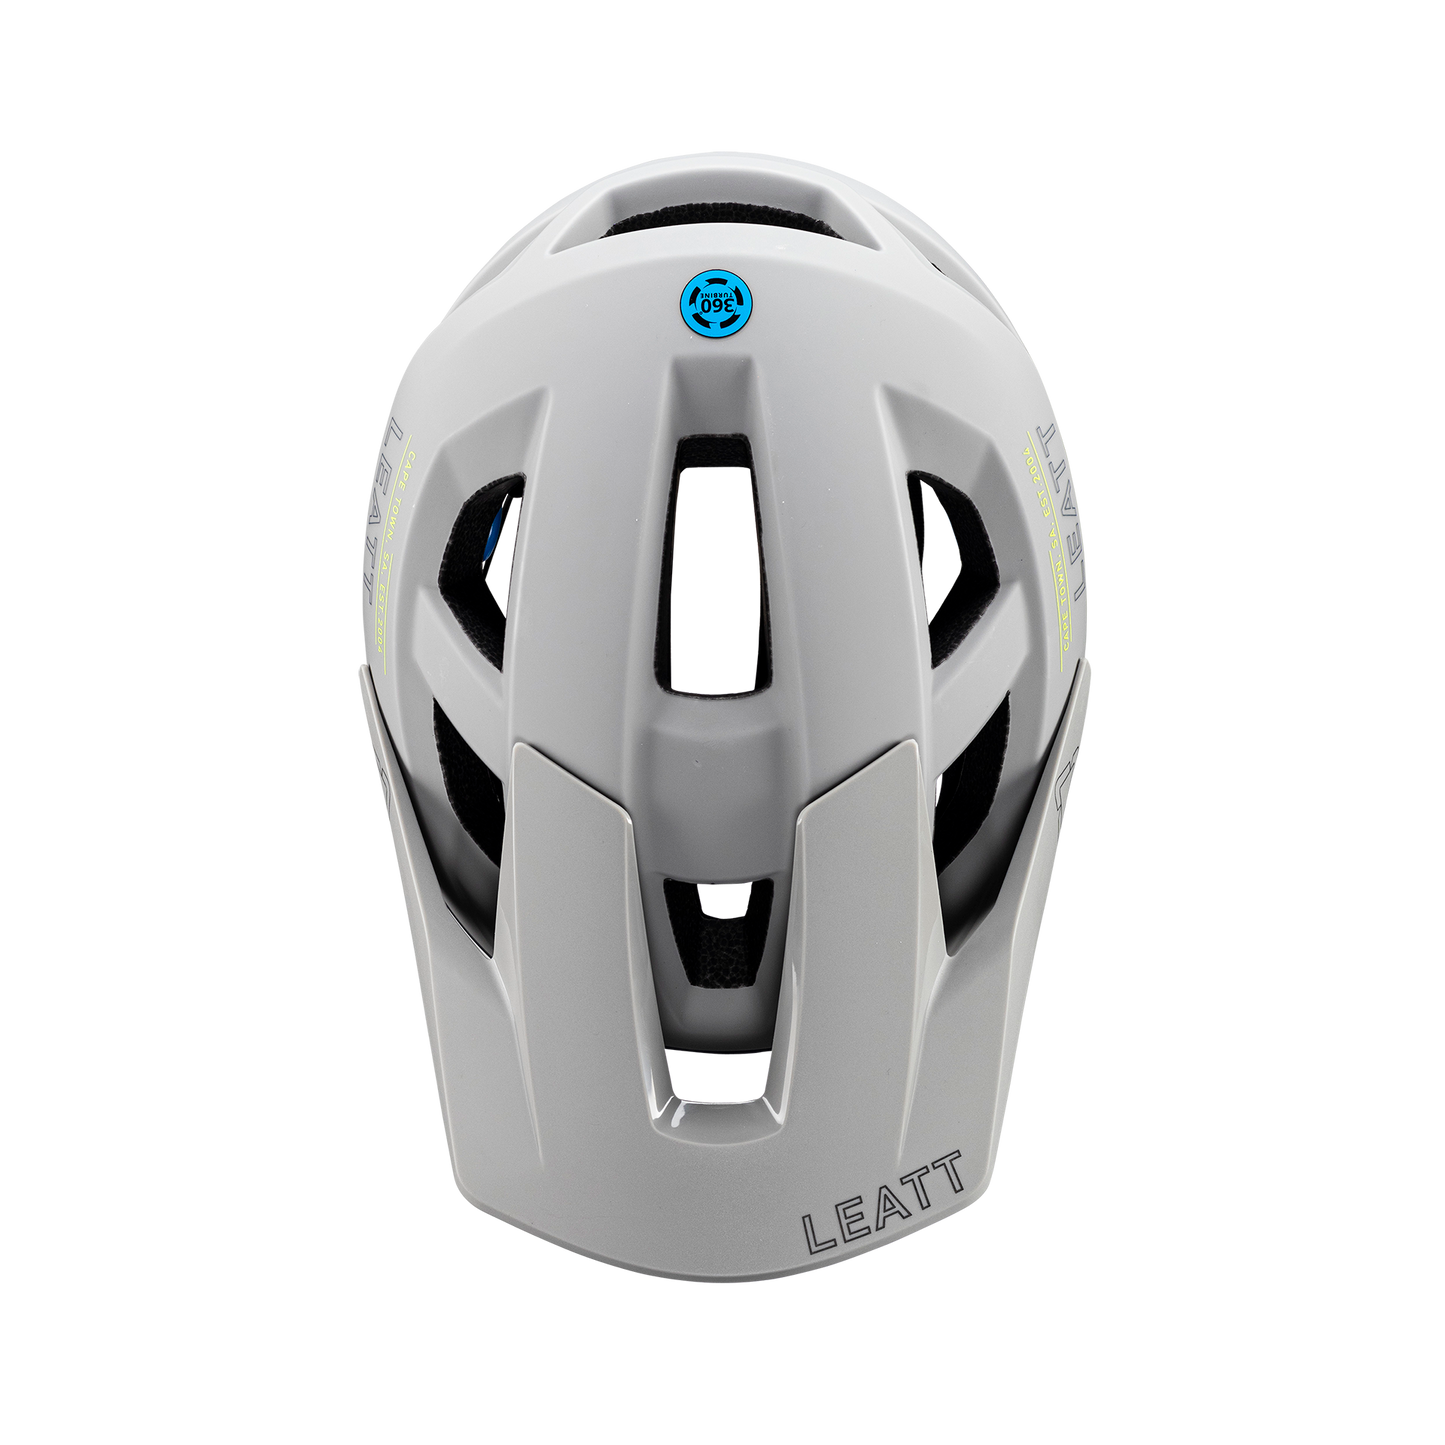 Helmet MTB AllMtn 2.0  - Granite